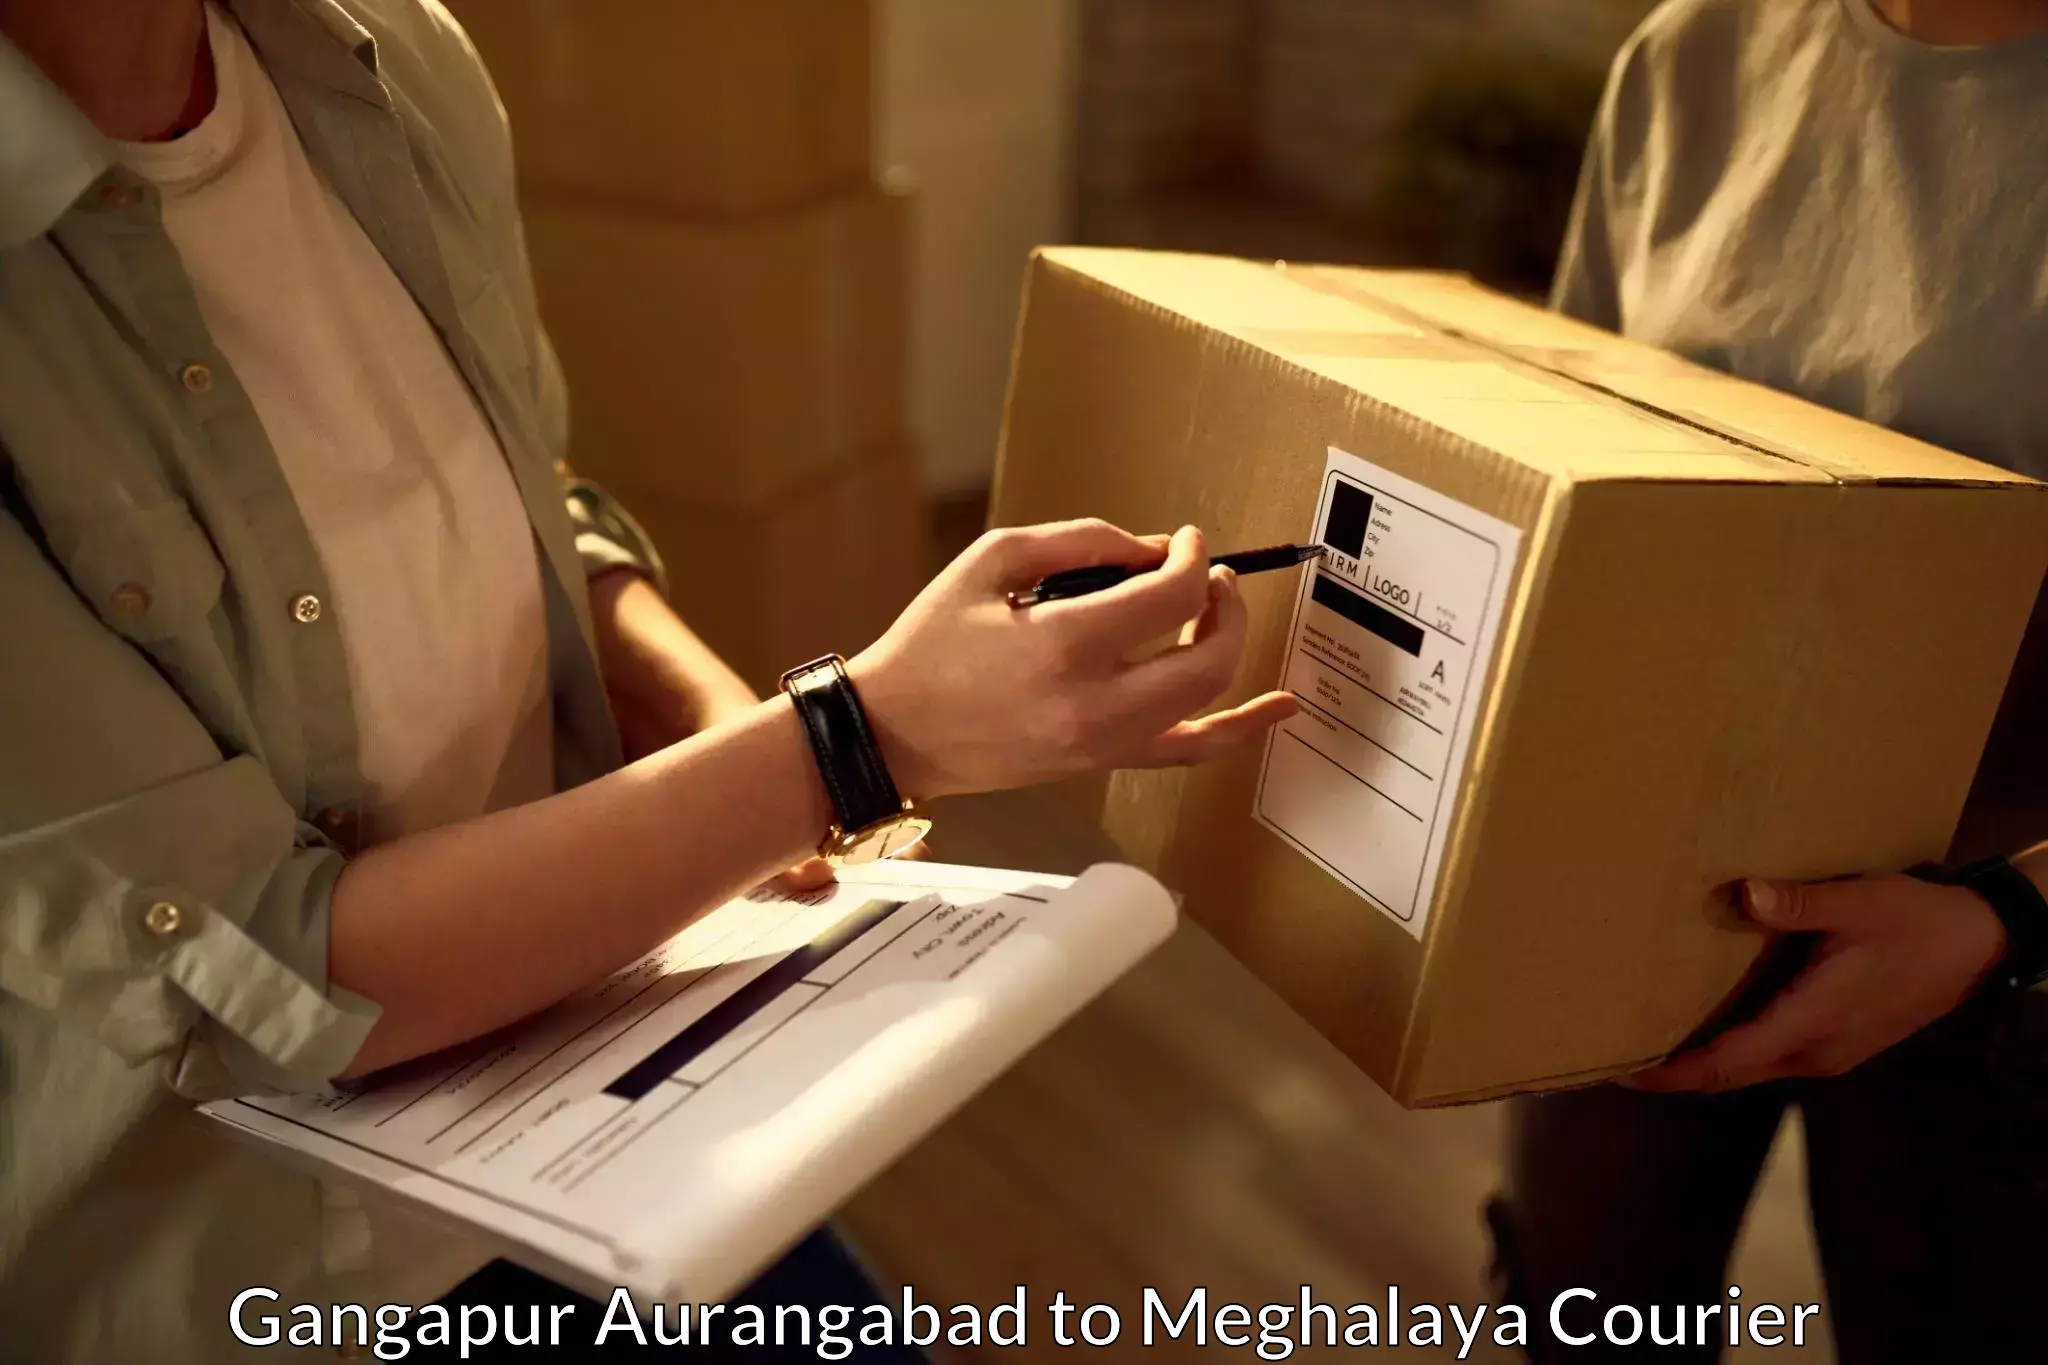 Express delivery capabilities Gangapur Aurangabad to Jowai